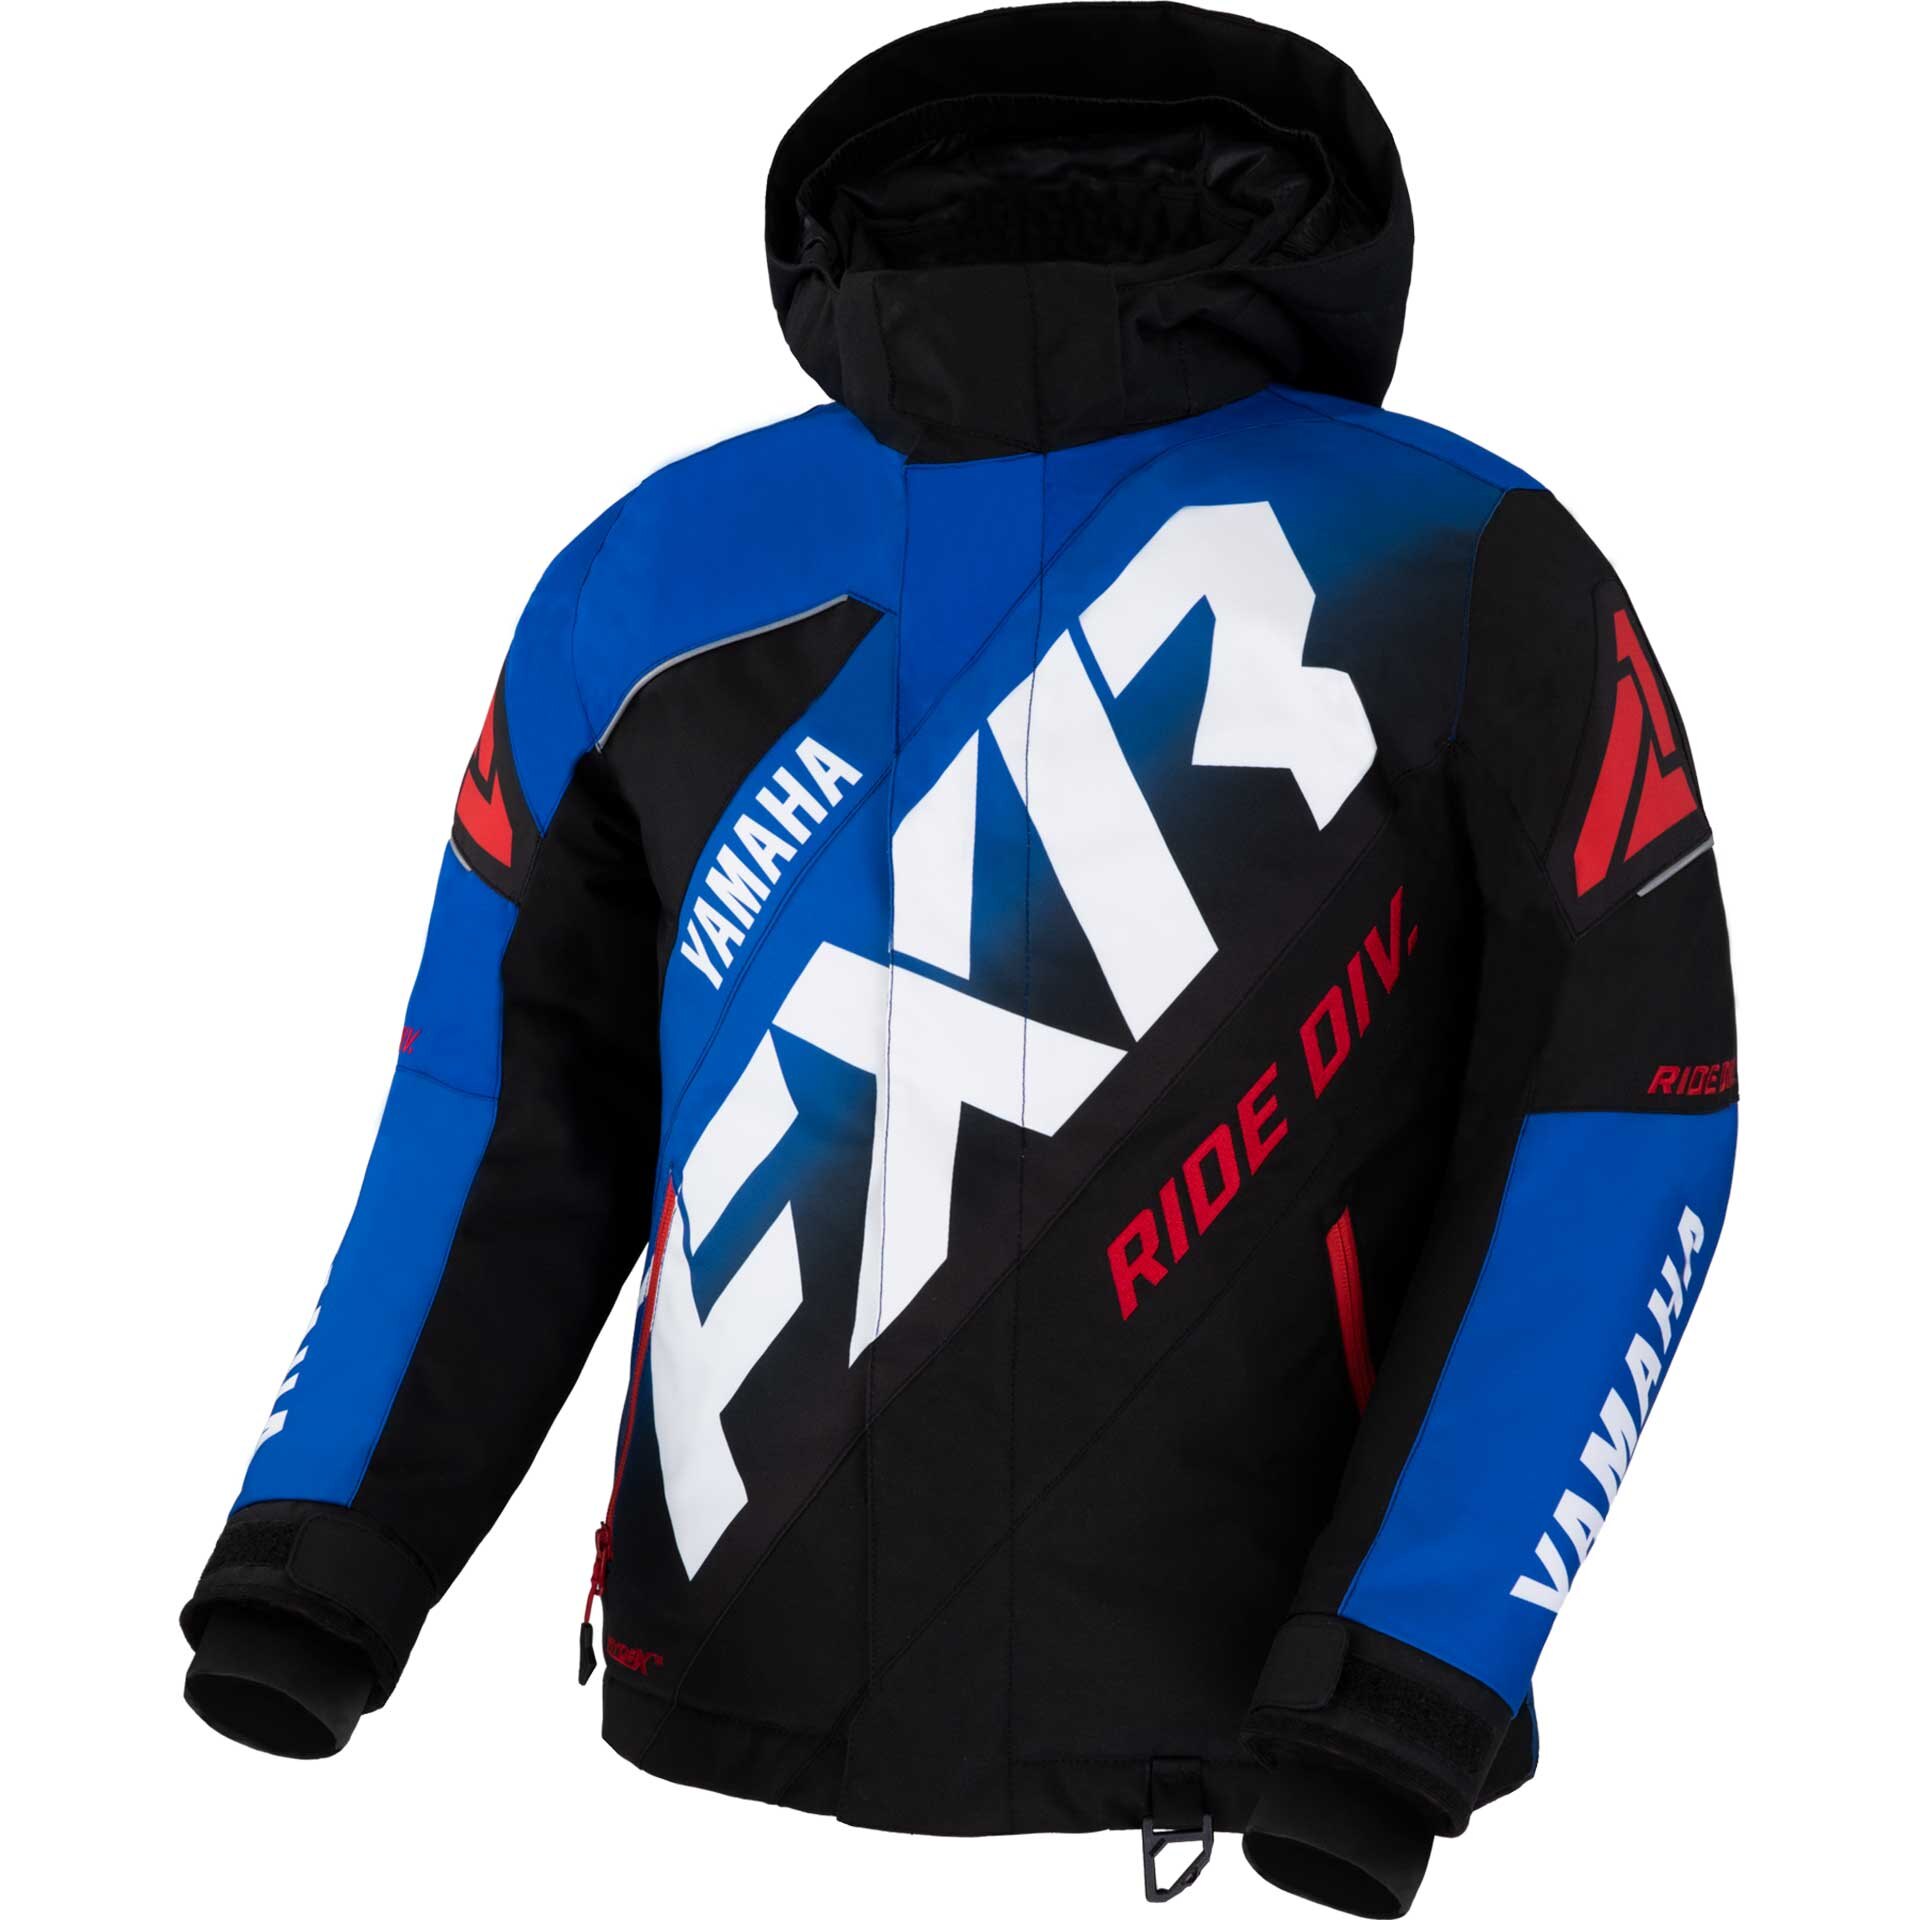 Children's Yamaha CX Jacket by FXR® Size 4/5 blue/red/white